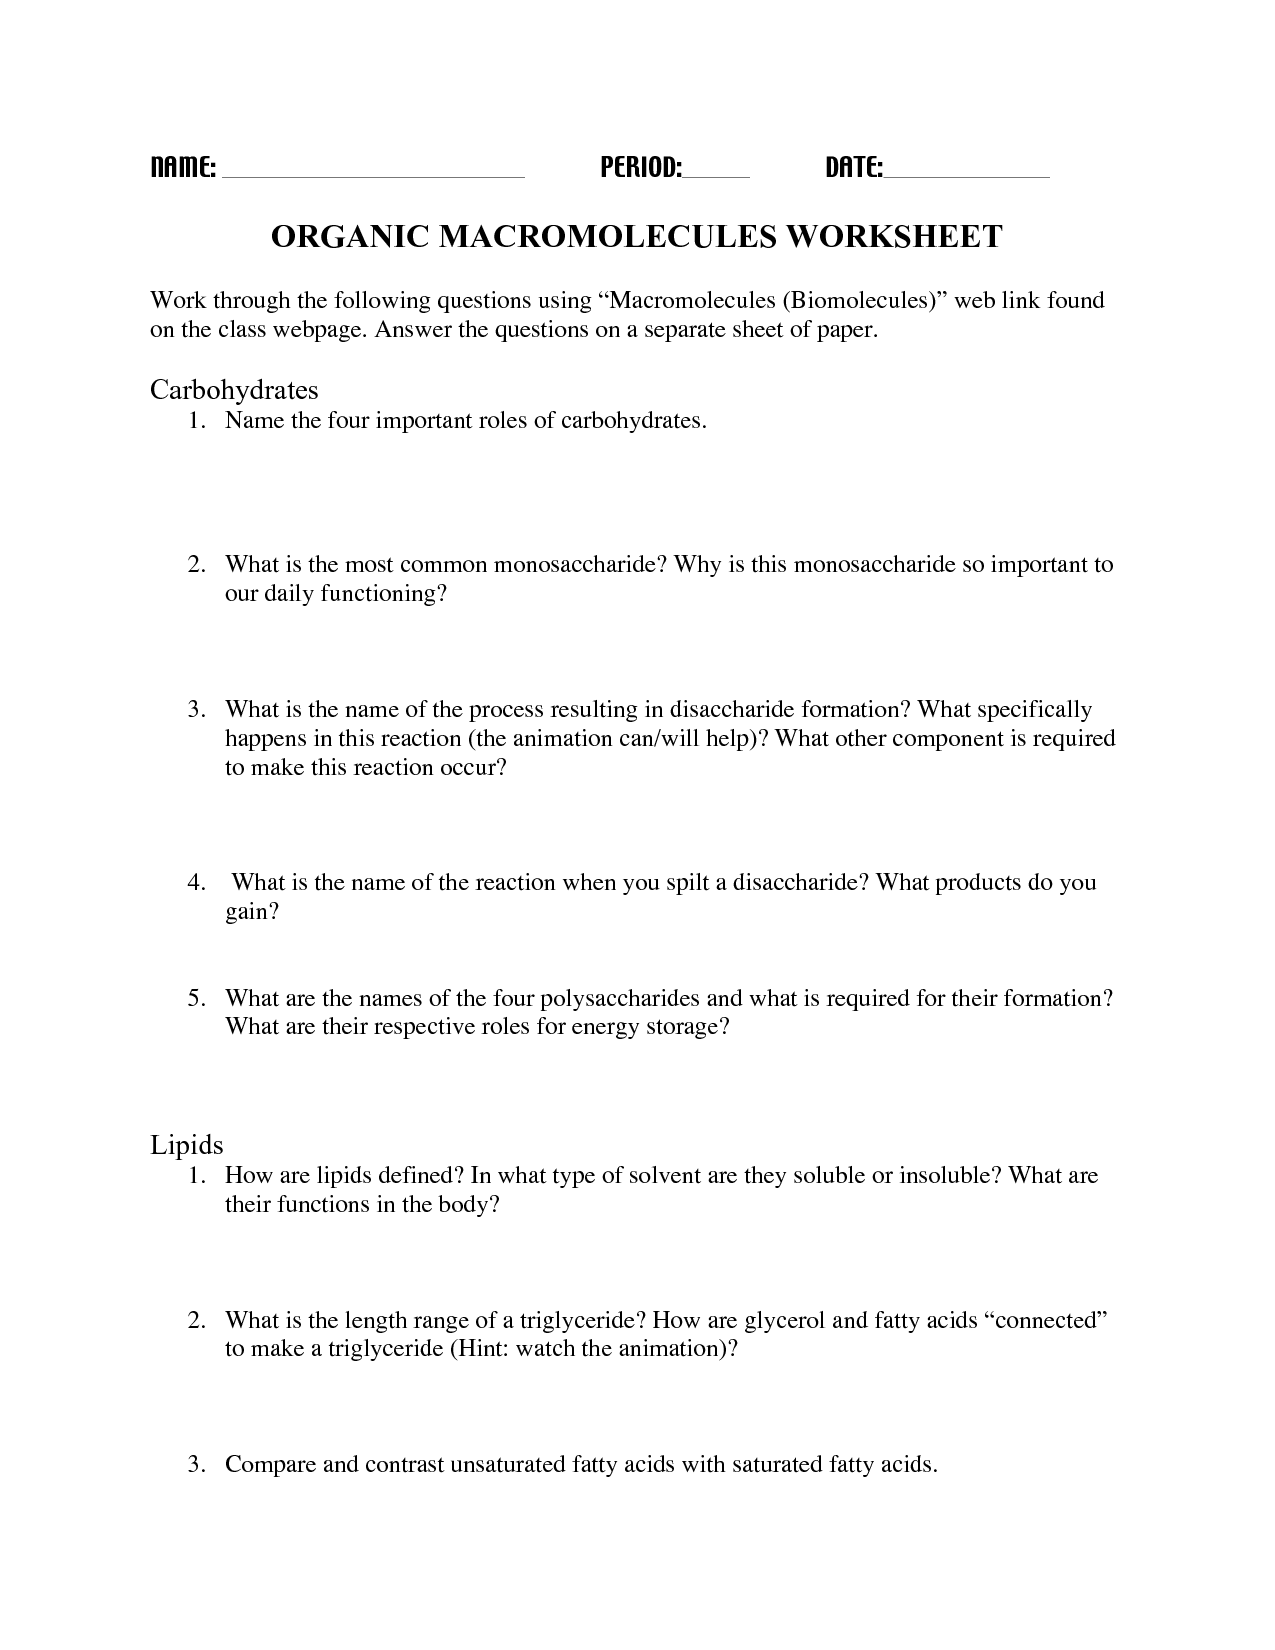 Organic Macromolecules Worksheet Answers Image